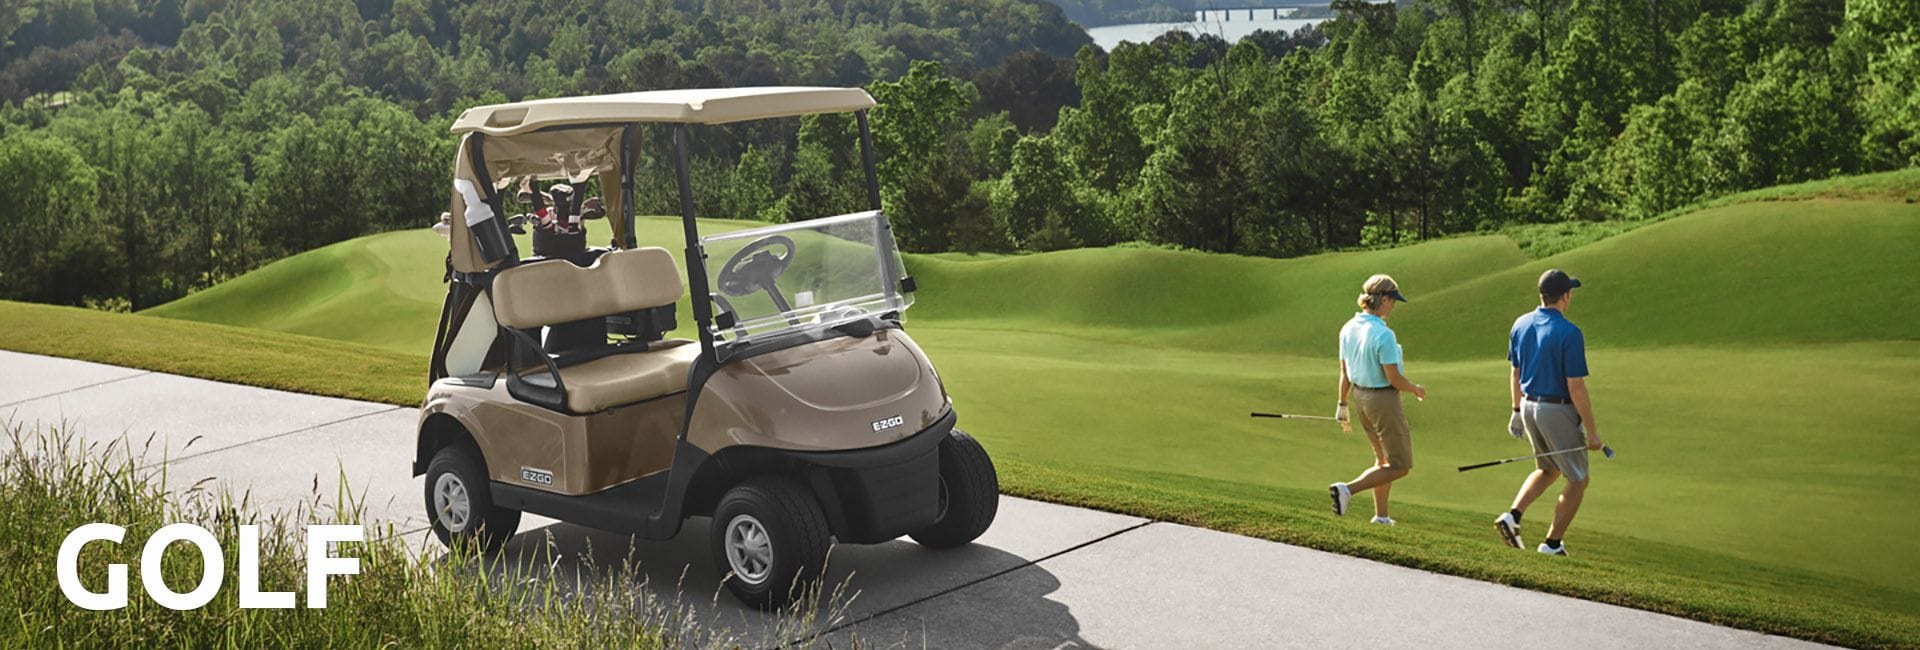 Golf Operations Vehicles | Golf Car World 